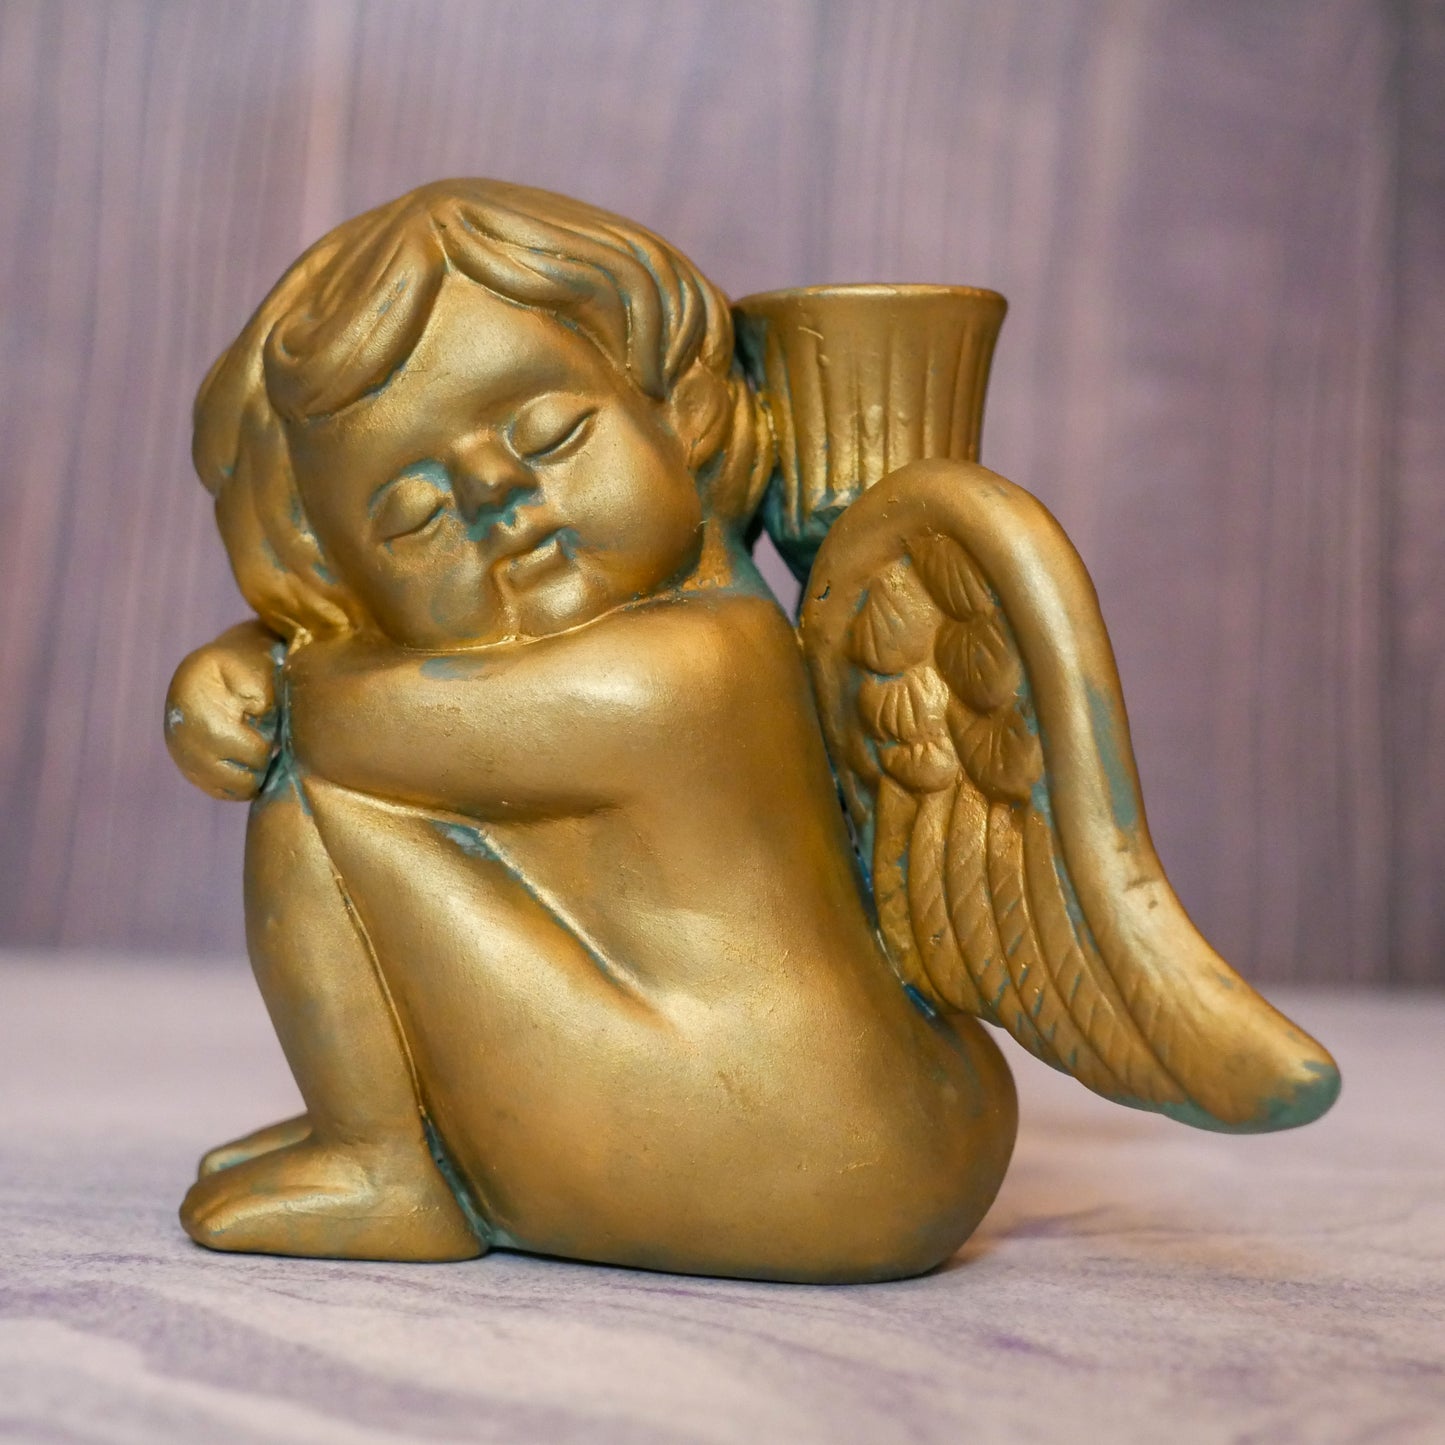 Pair of Ceramic Gold Cherub Candlestick Holder | Cherub Home Decoration Gift 5.25"